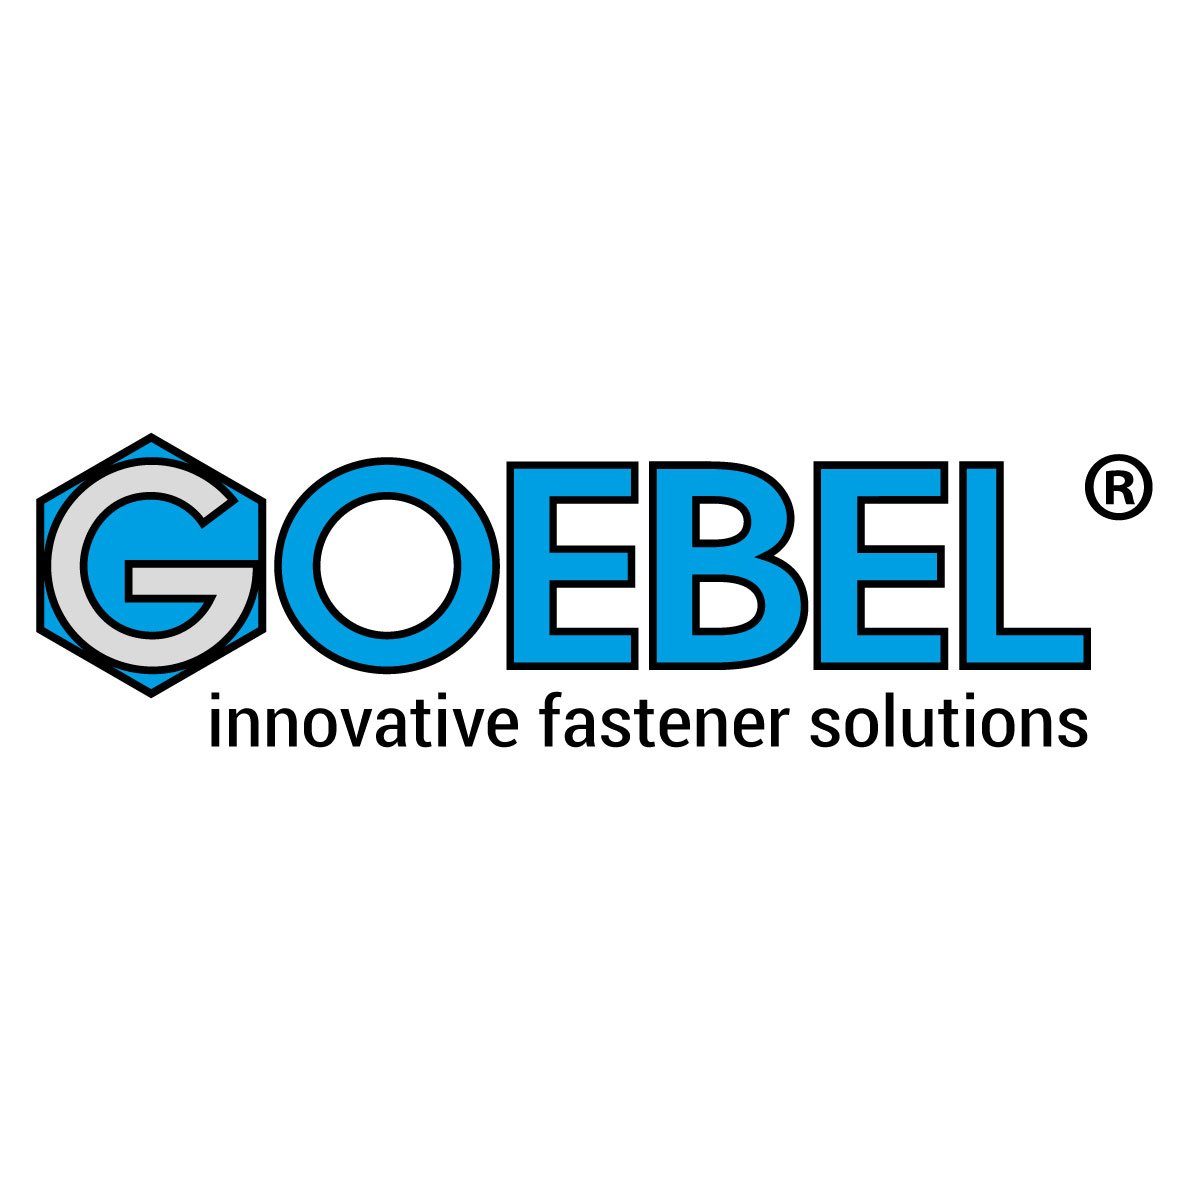 GOEBEL GmbH 4,8 Blindniete Niete 500 14,0 - Hochfeste Nietdorn), II x mm, 7210048140, Senkkopf GO-BULB / - St., Blindniete gerilltem Stahl mit Stahl (500x